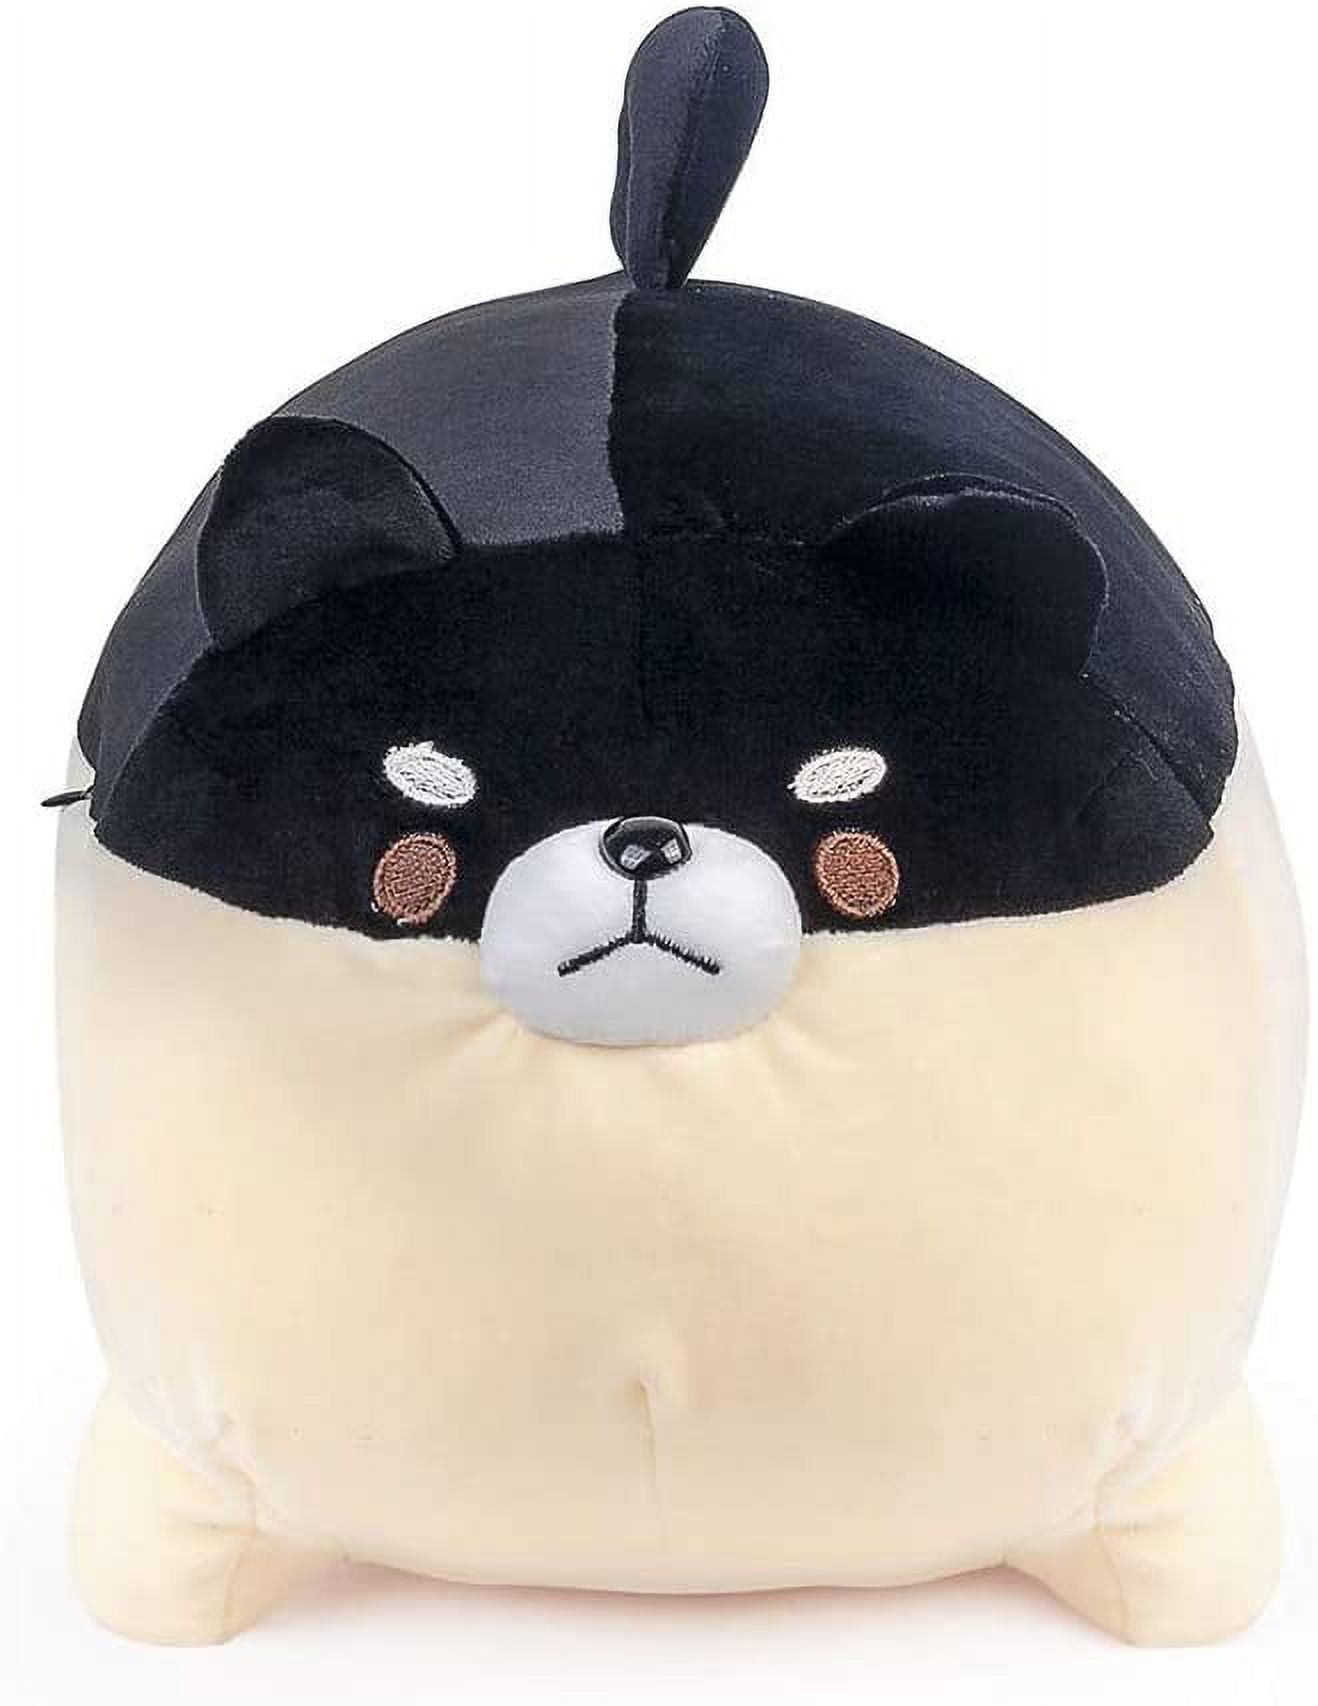 zhidiloveyou Corgi Stuffed Animal Shiba Inu Dog Kawaii Plush Toy Soft Hug  Pillow, 15.75 inch